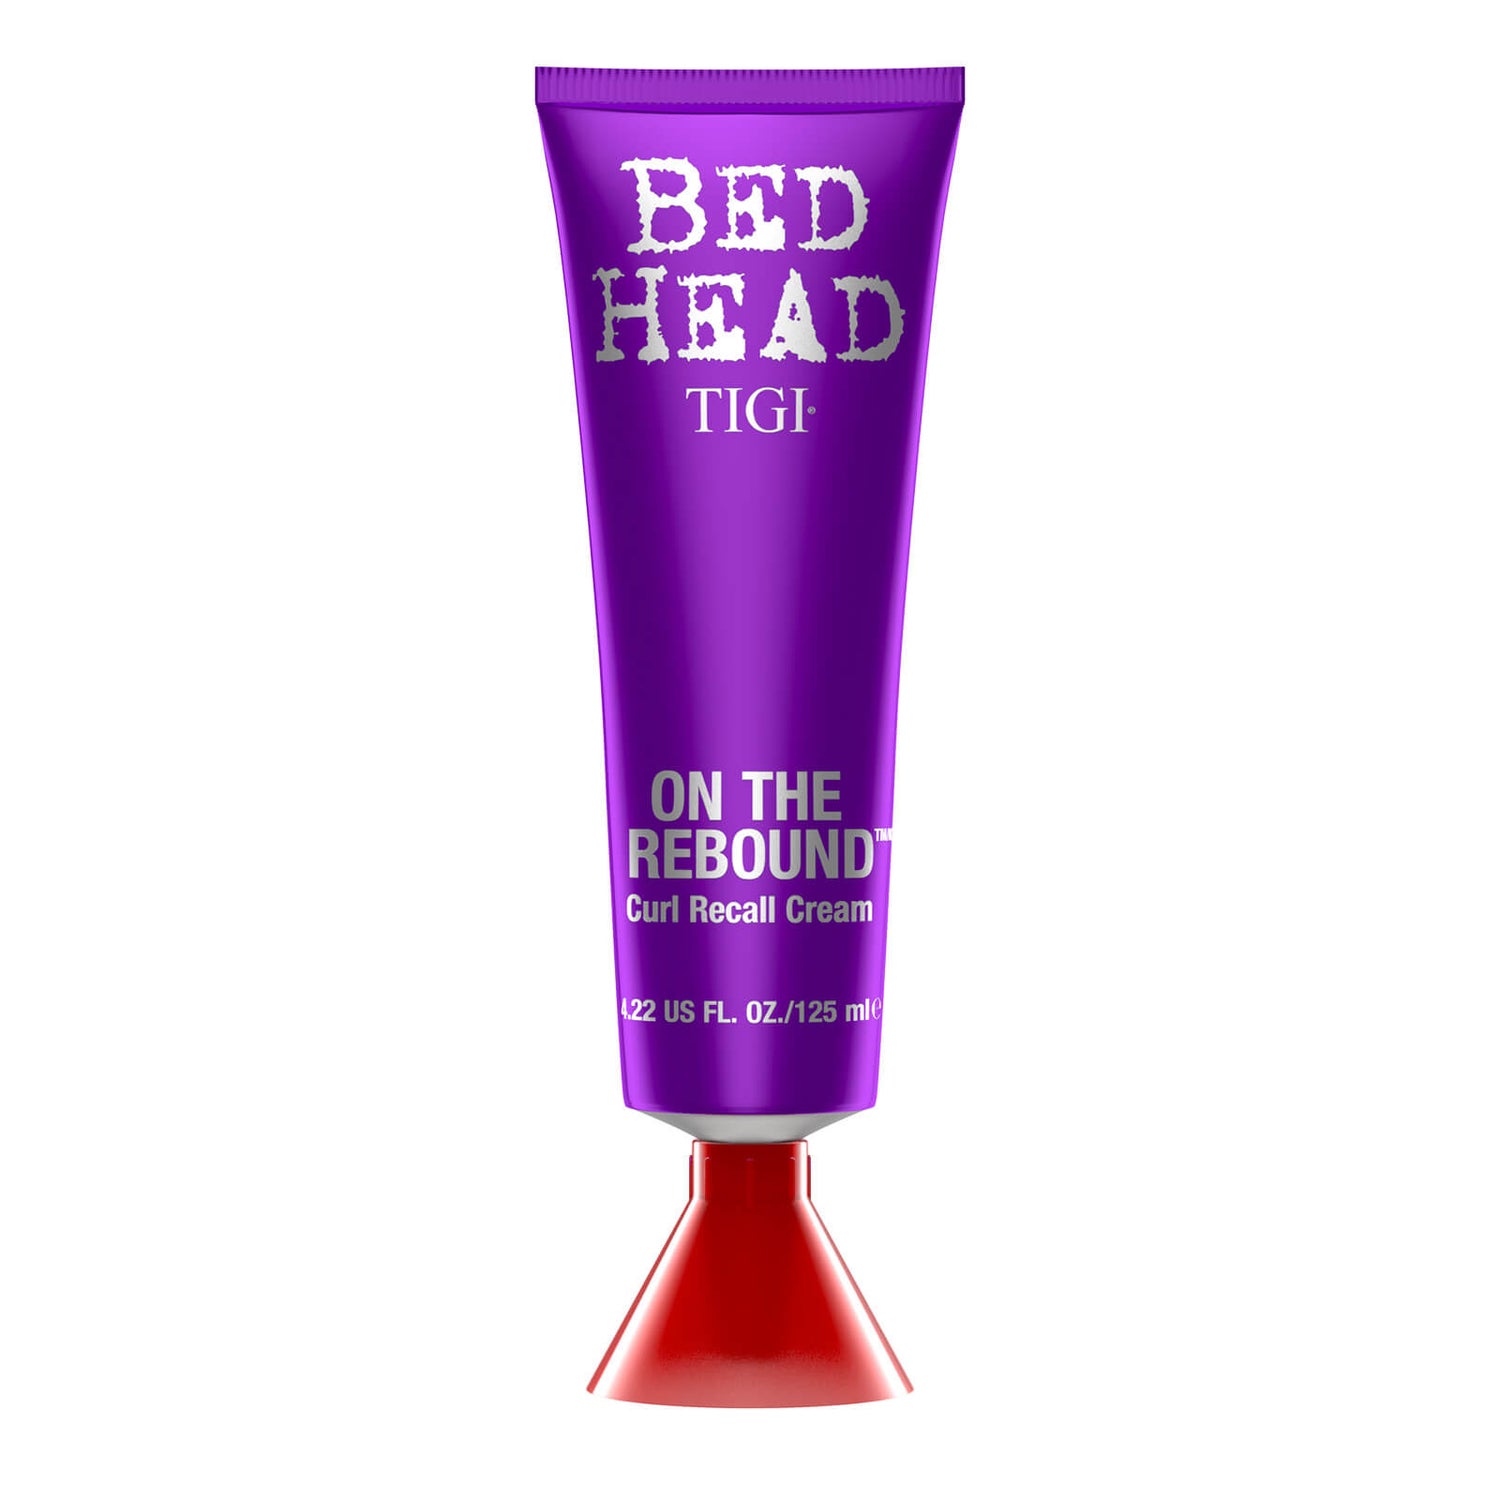 TIGI Bed Head on the Rebound Curl Recall Cream (4 oz.)